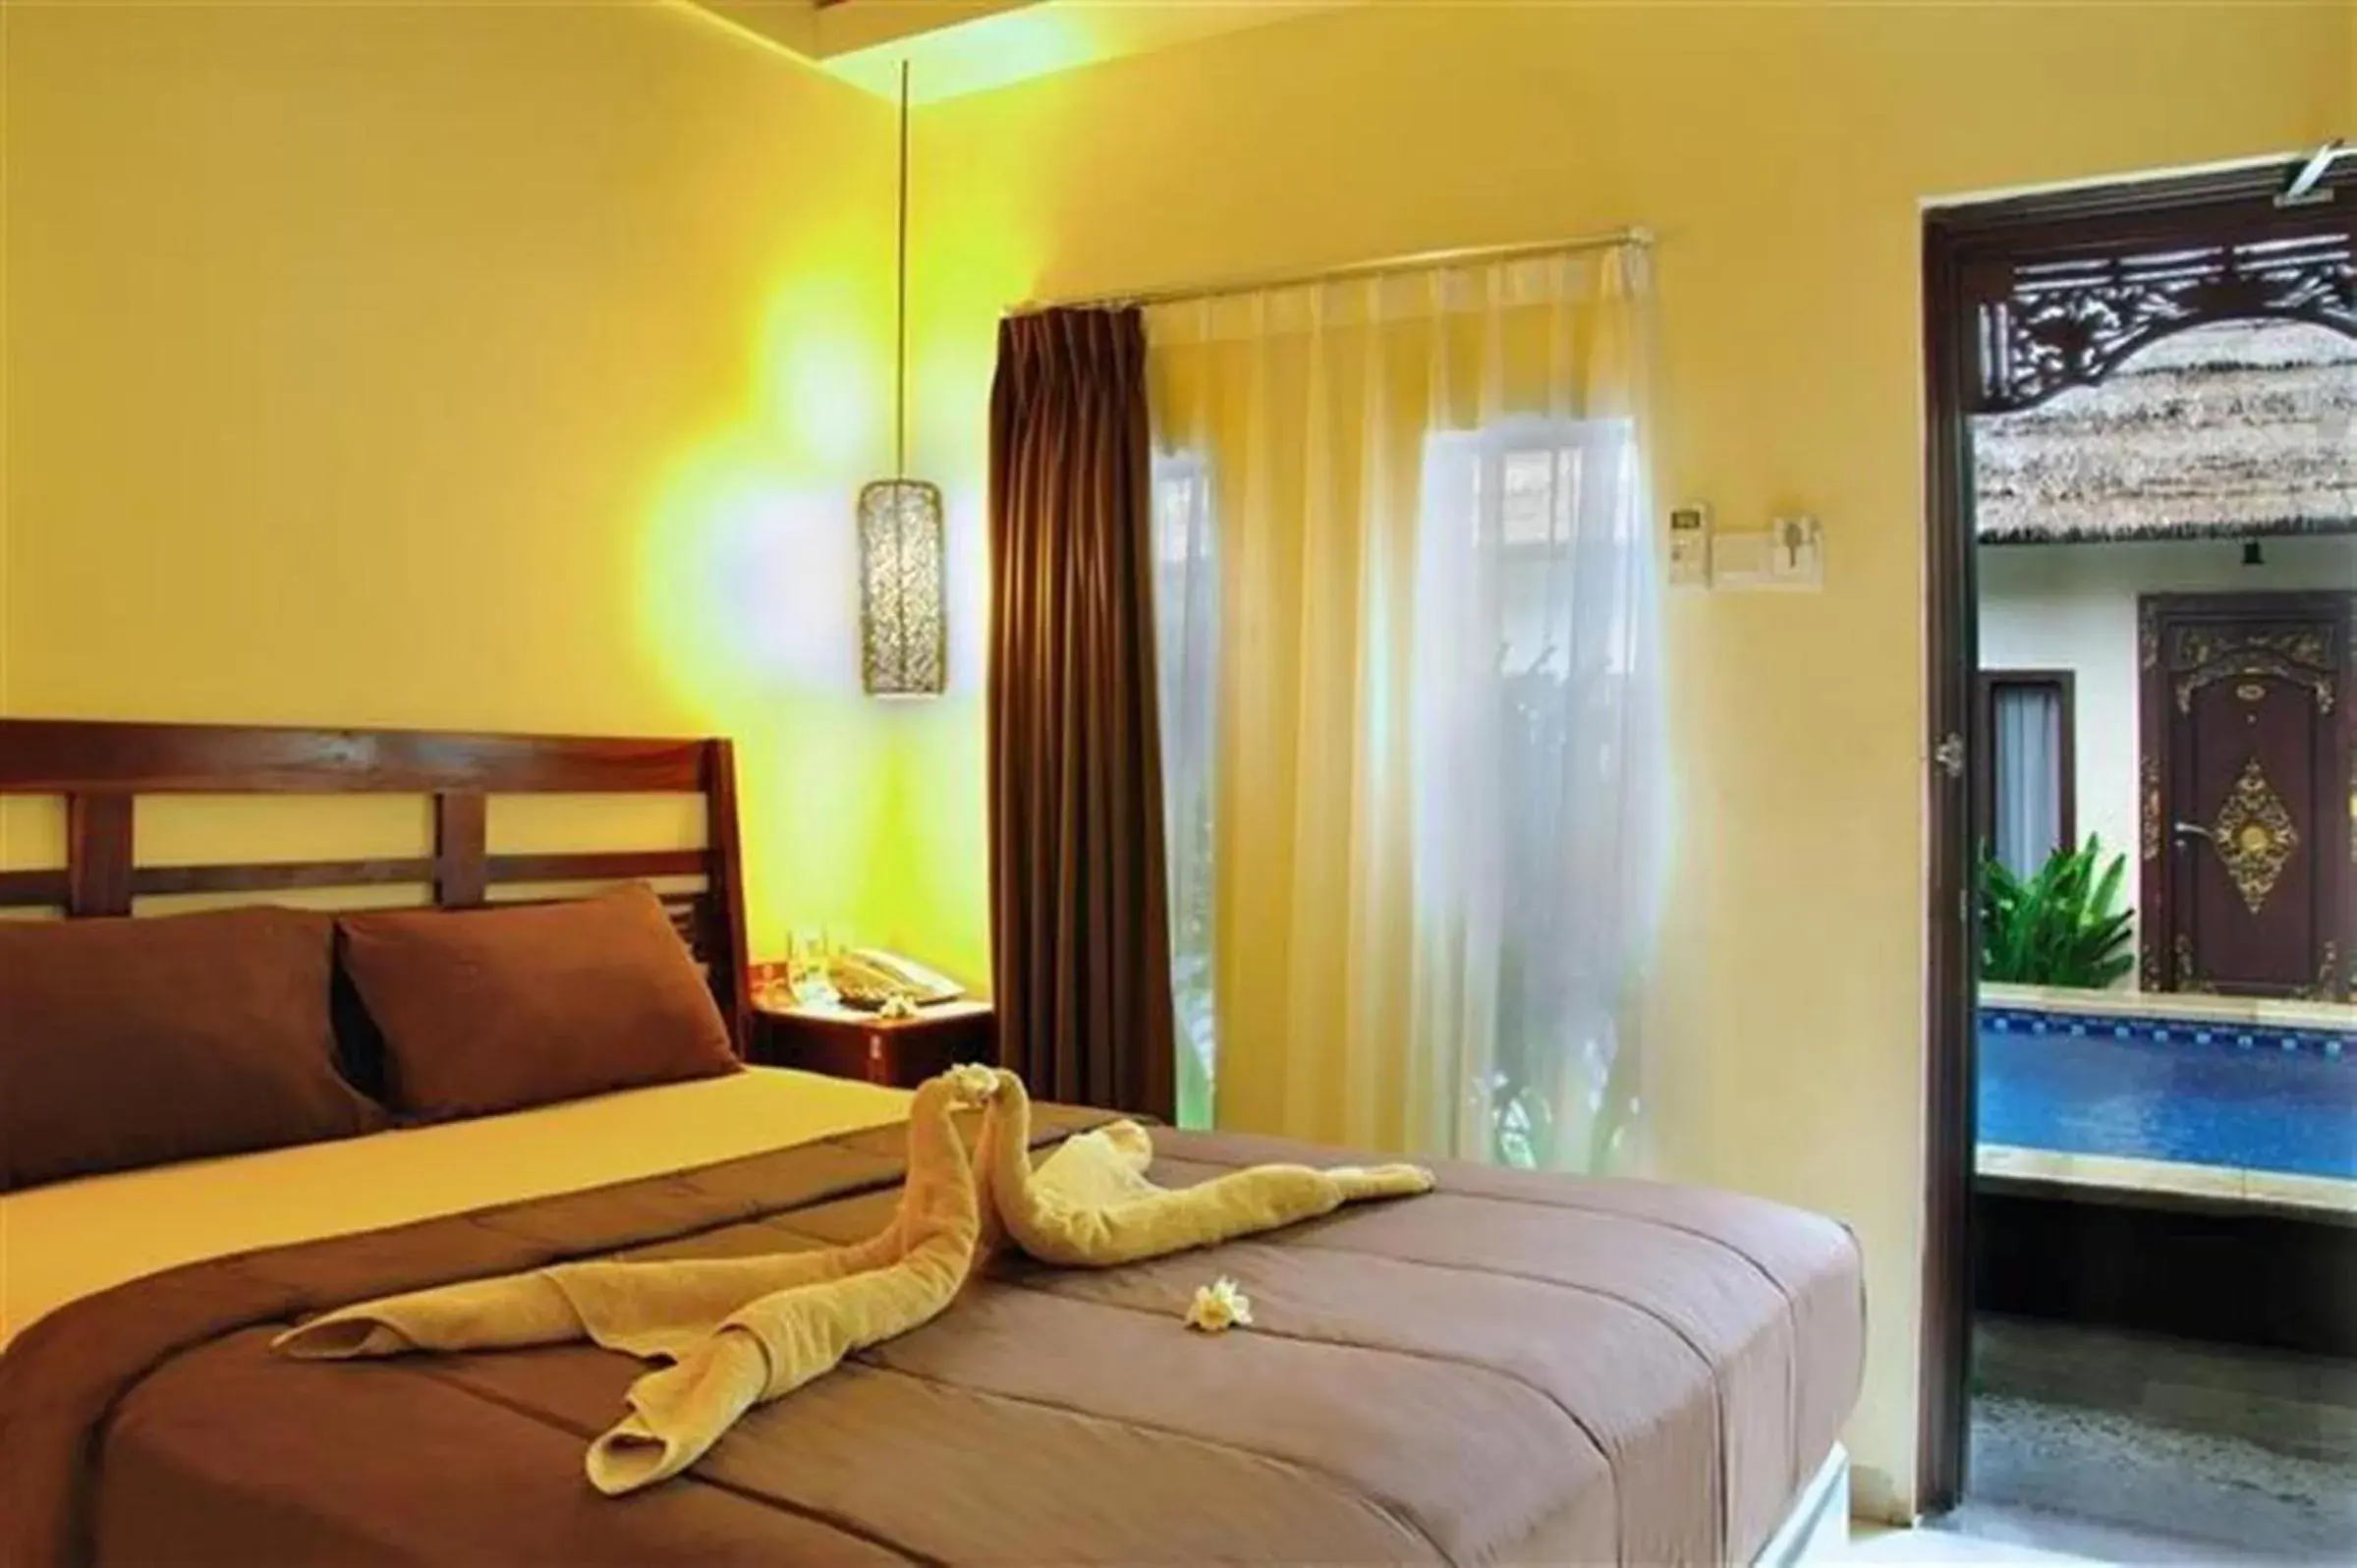 Bedroom, Bed in Coco de Heaven Hotel